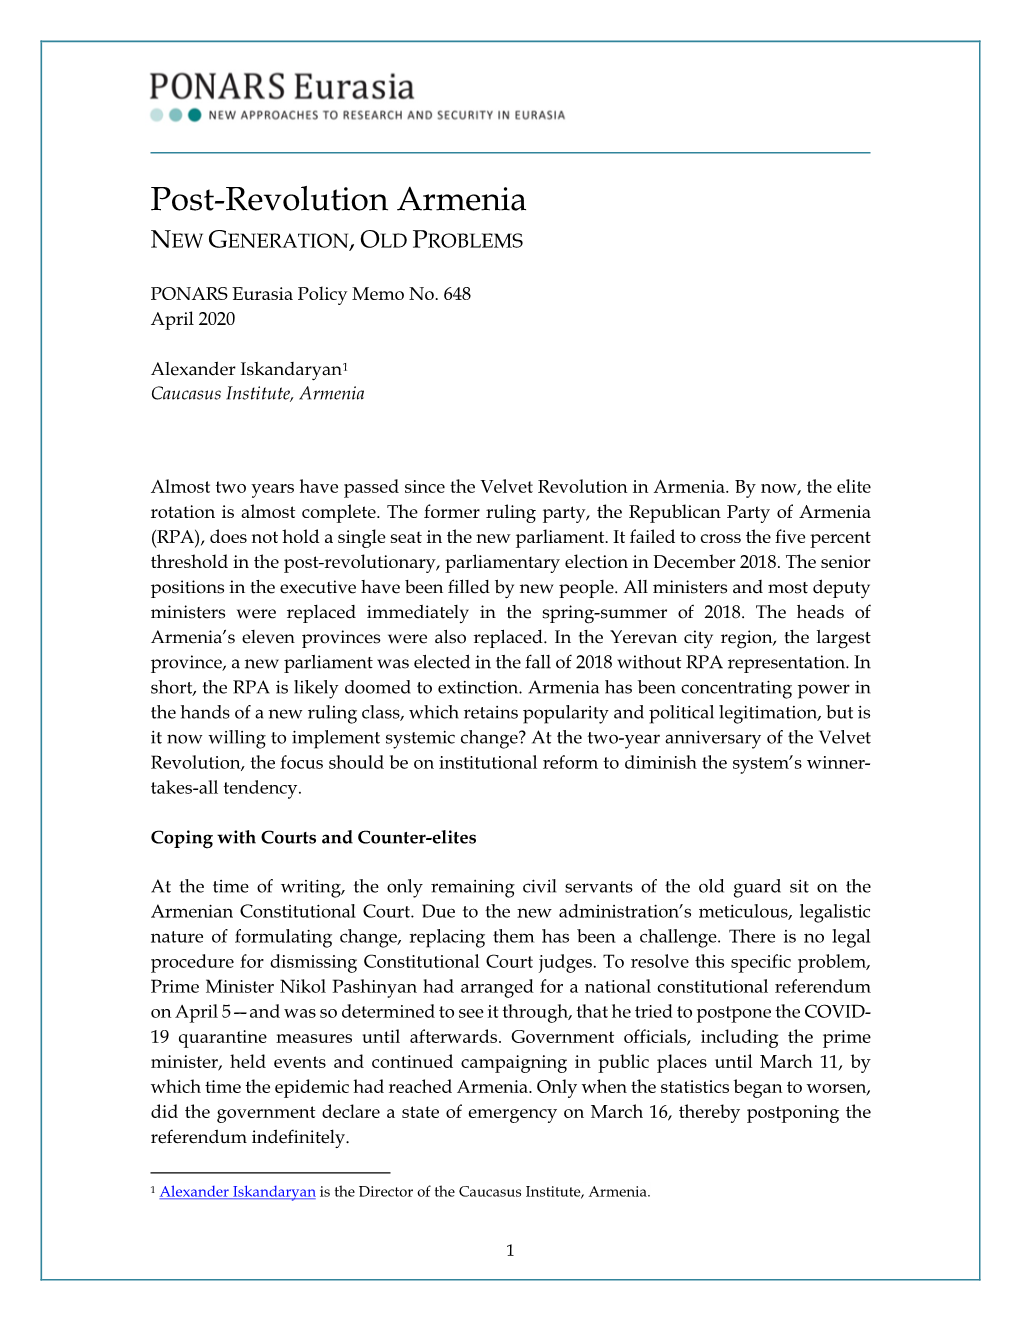 Post-Revolution Armenia NEW GENERATION, OLD PROBLEMS